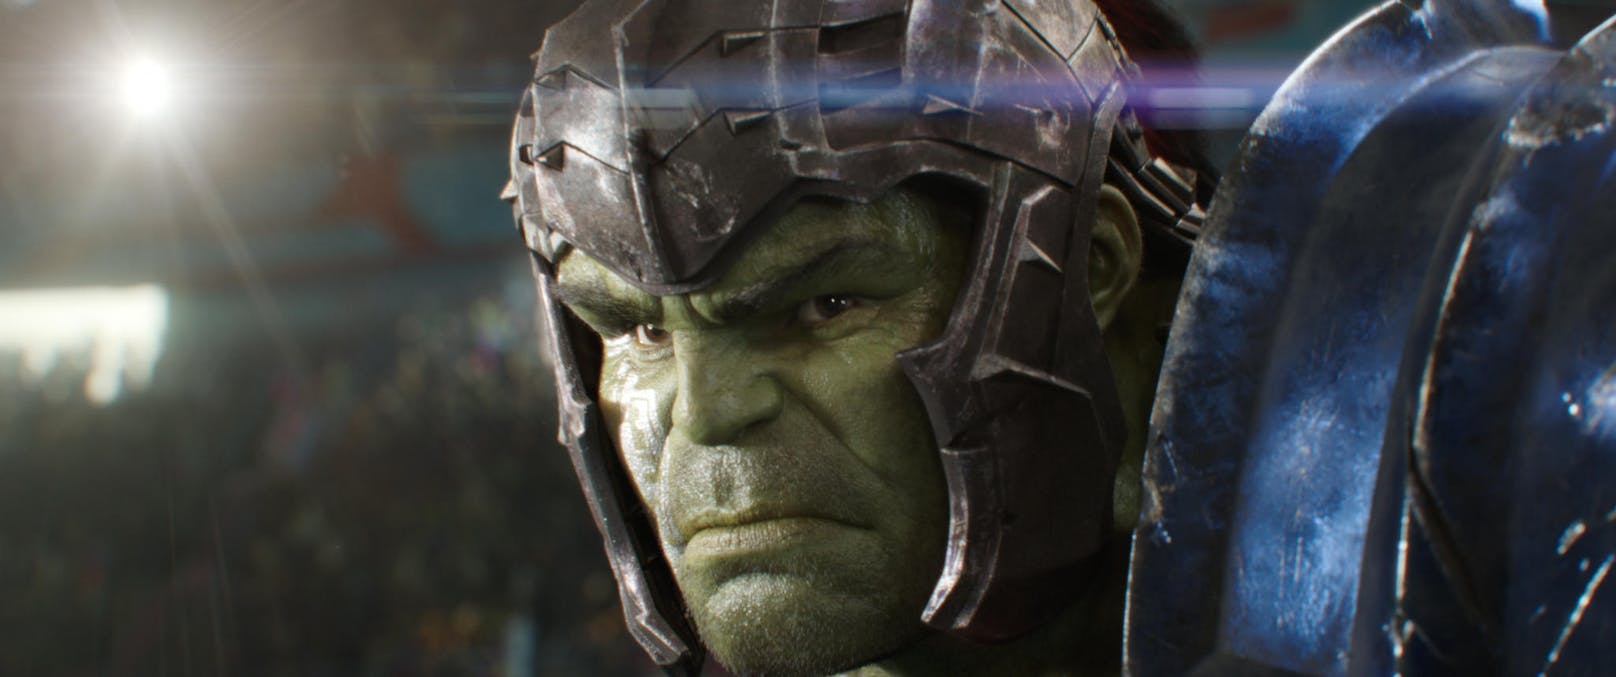 Mark Ruffalo als Hulk in "Thor: Ragnarok"